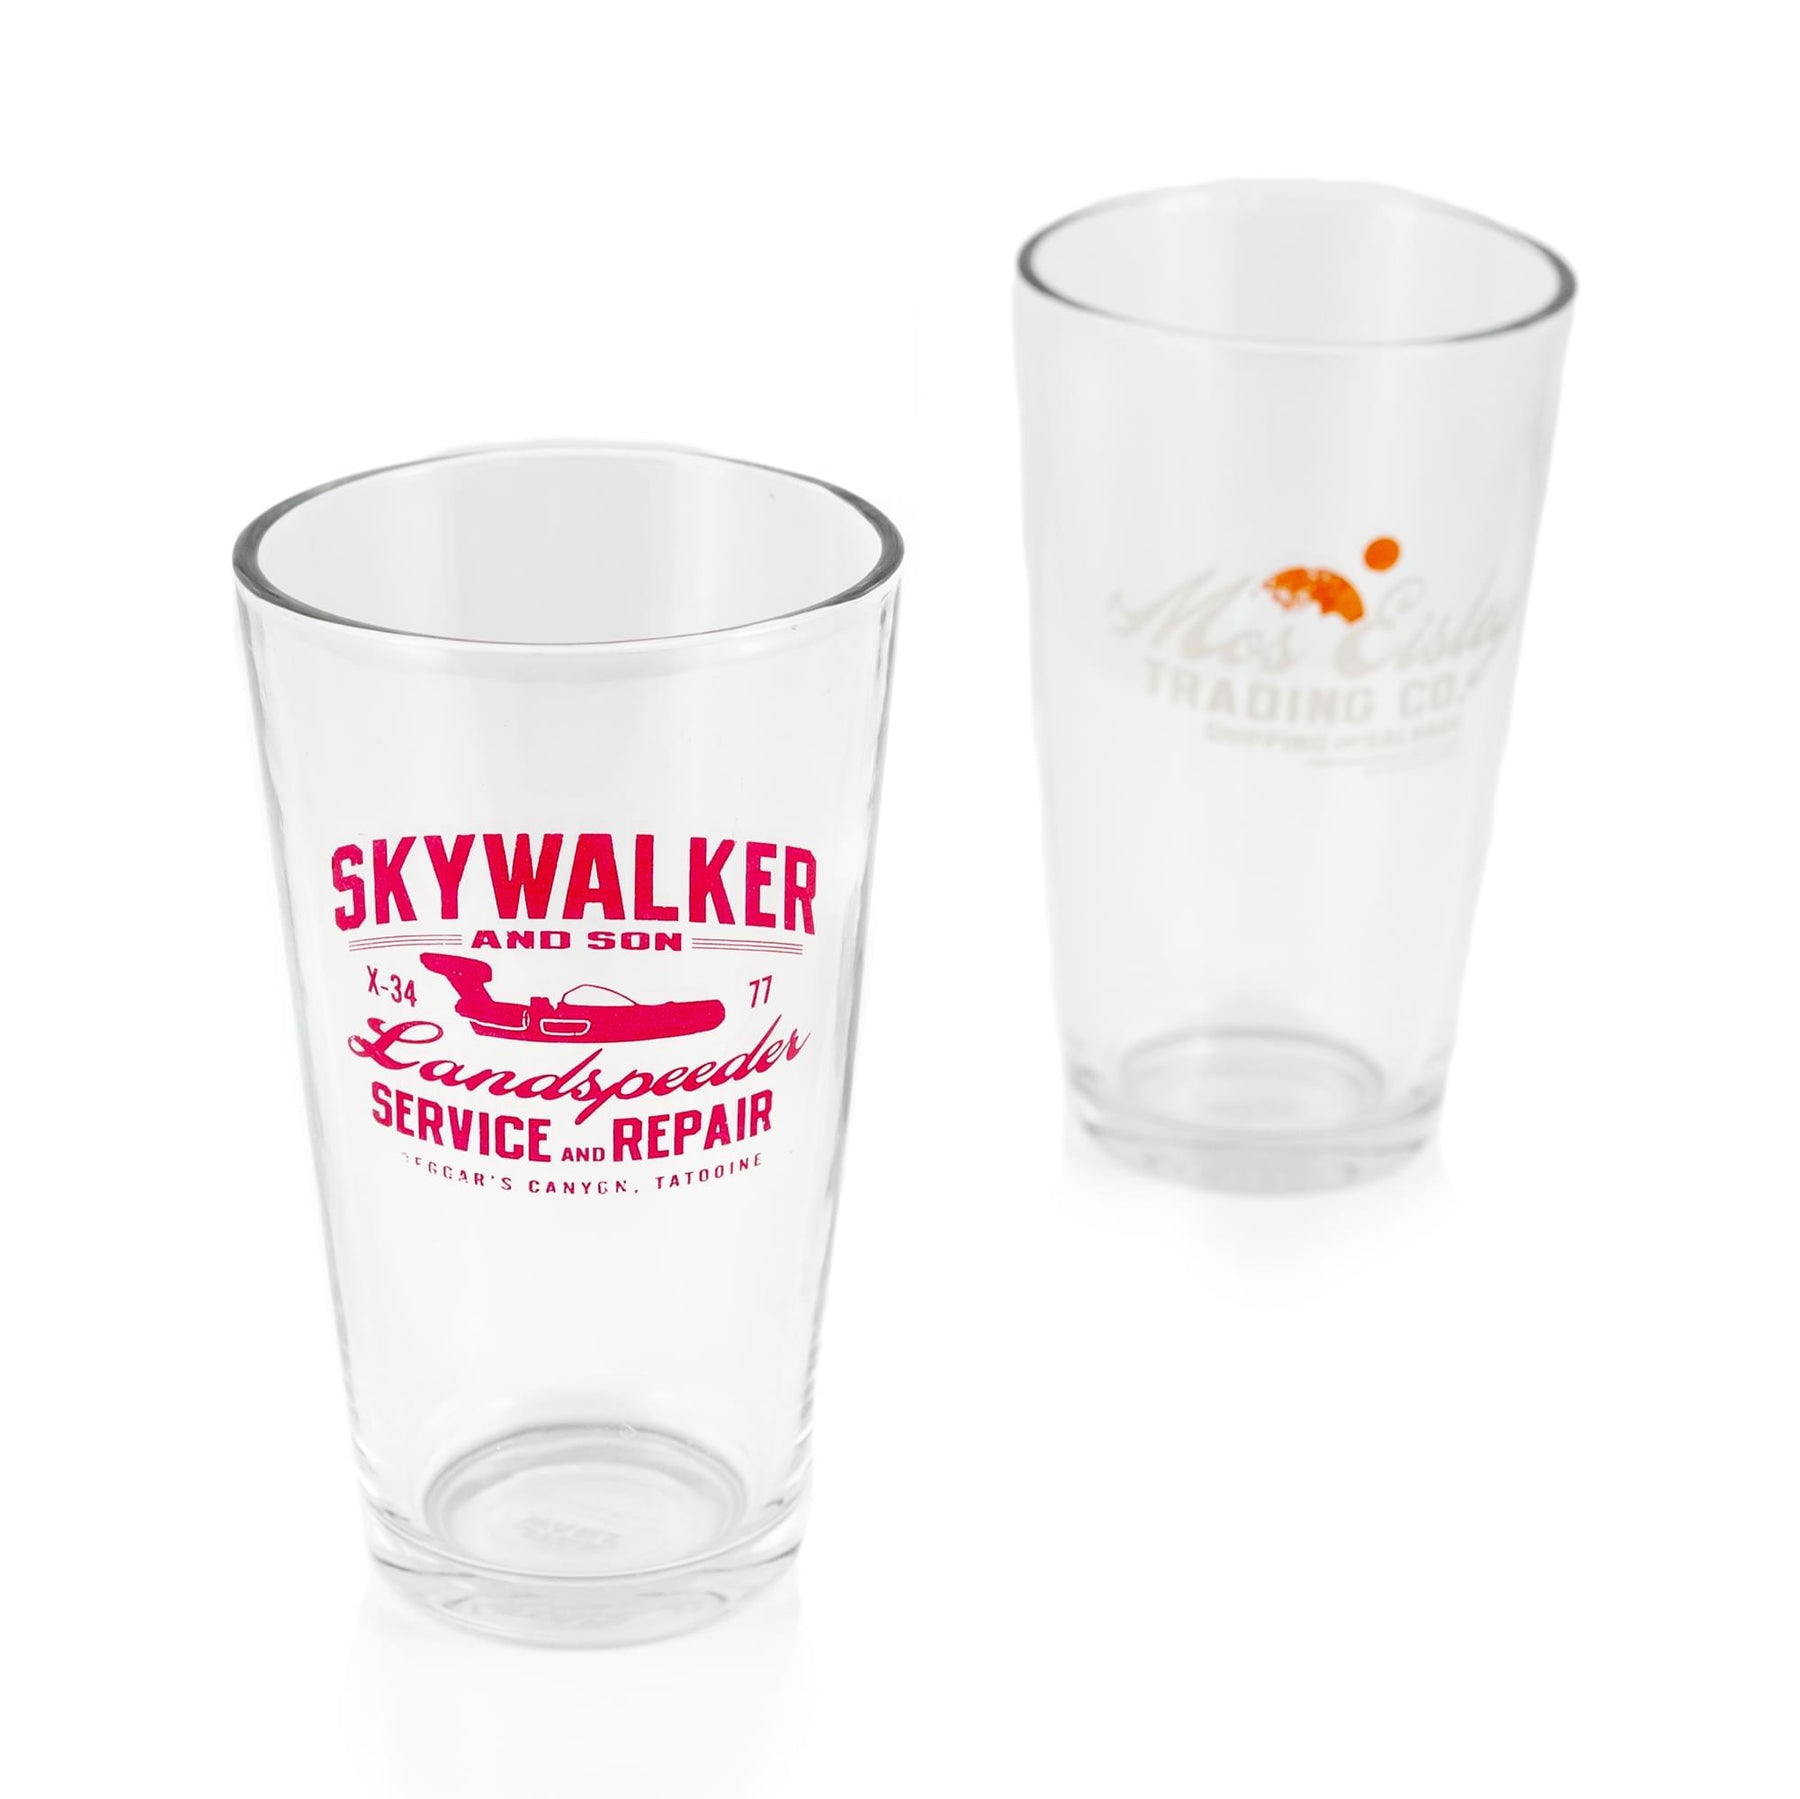 Star Wars 16 oz Pint Glass 2-Piece Set | Mos Eisley Co. | Skywalker & Sons Designs